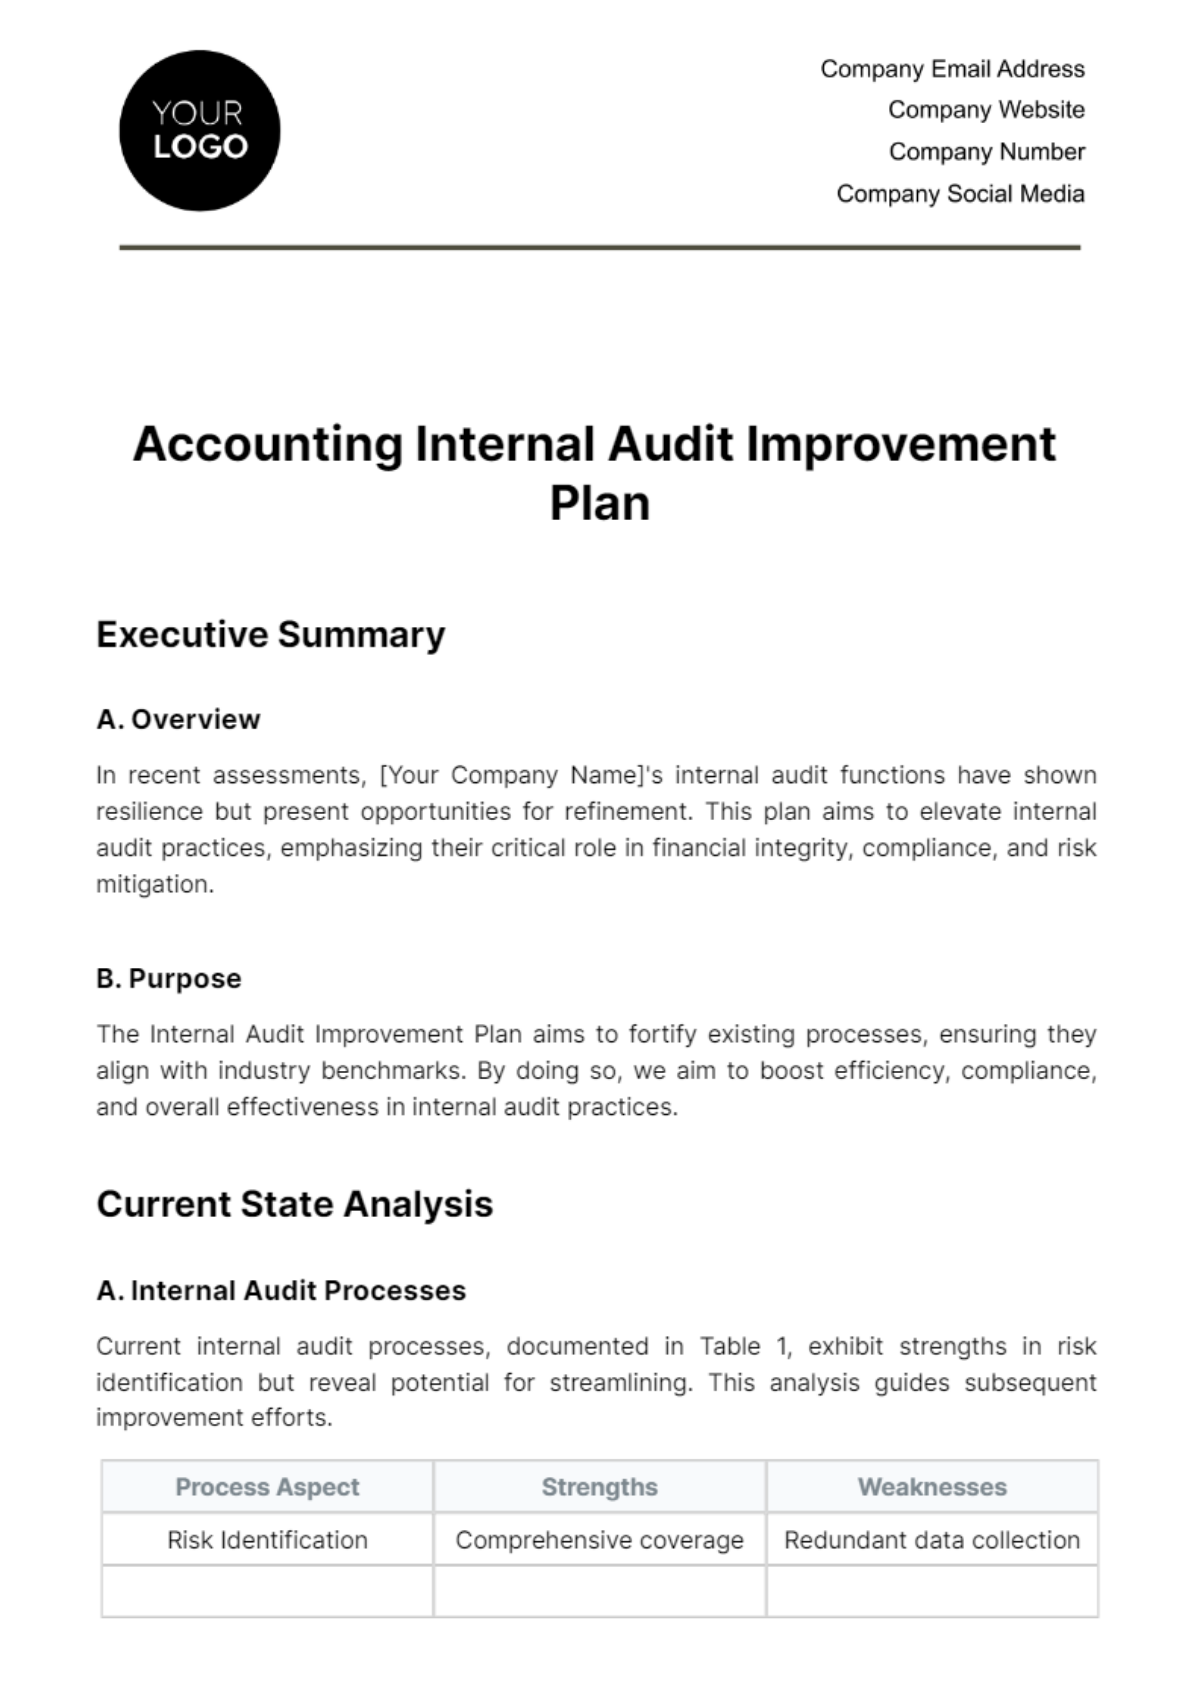 Accounting Internal Audit Improvement Plan Template